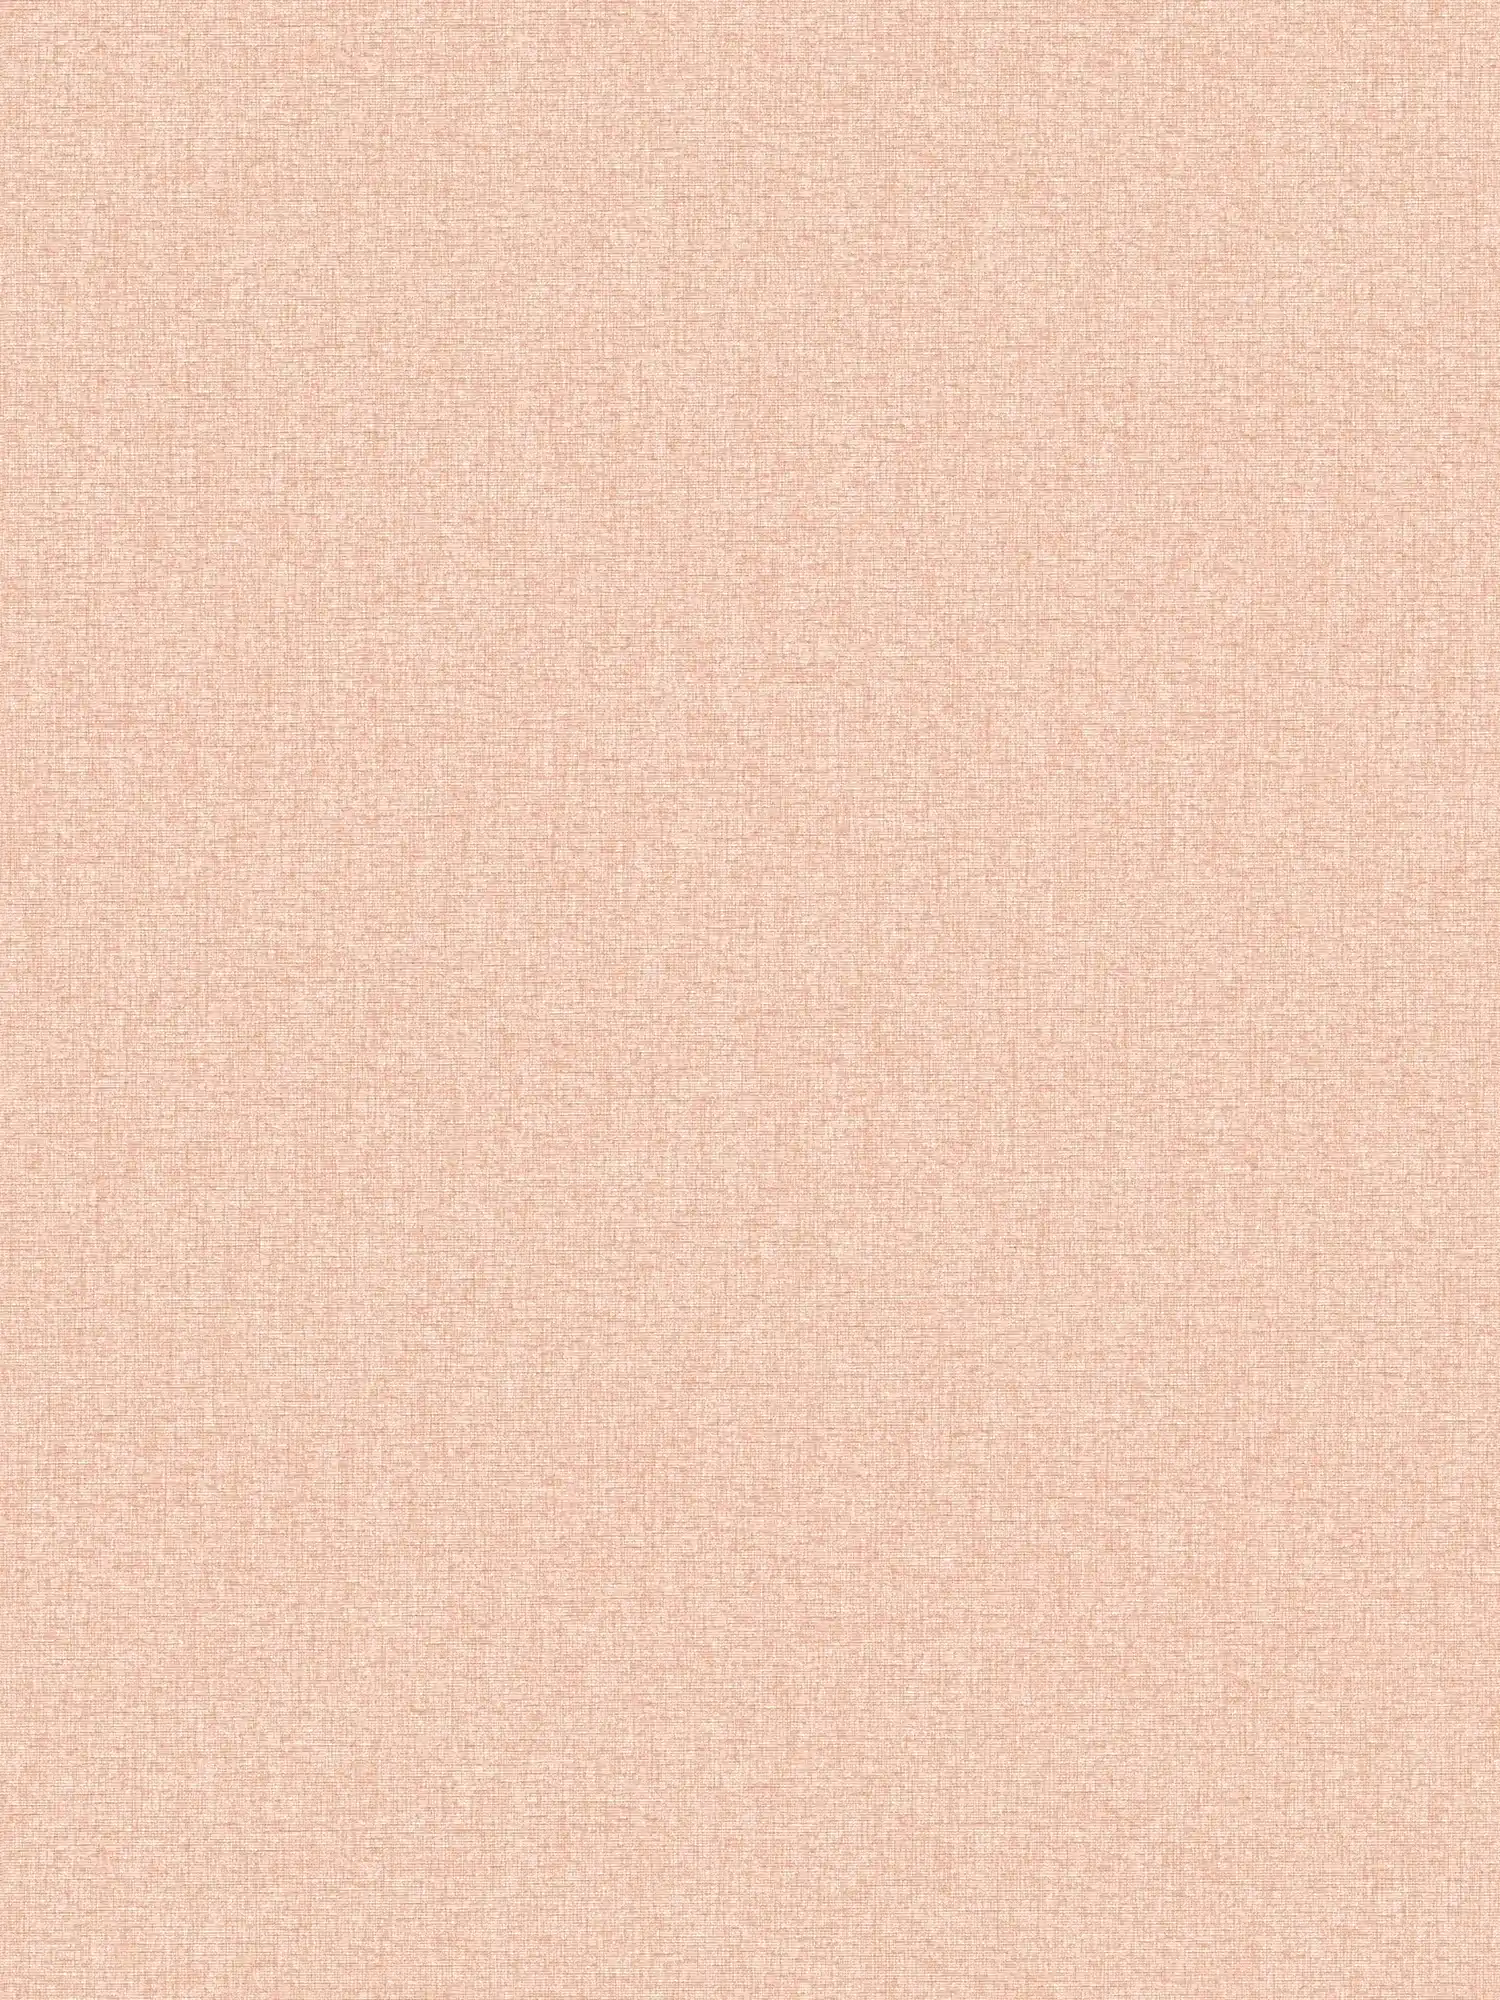 Non-woven wallpaper with textured design plain, matt - orange, pink
